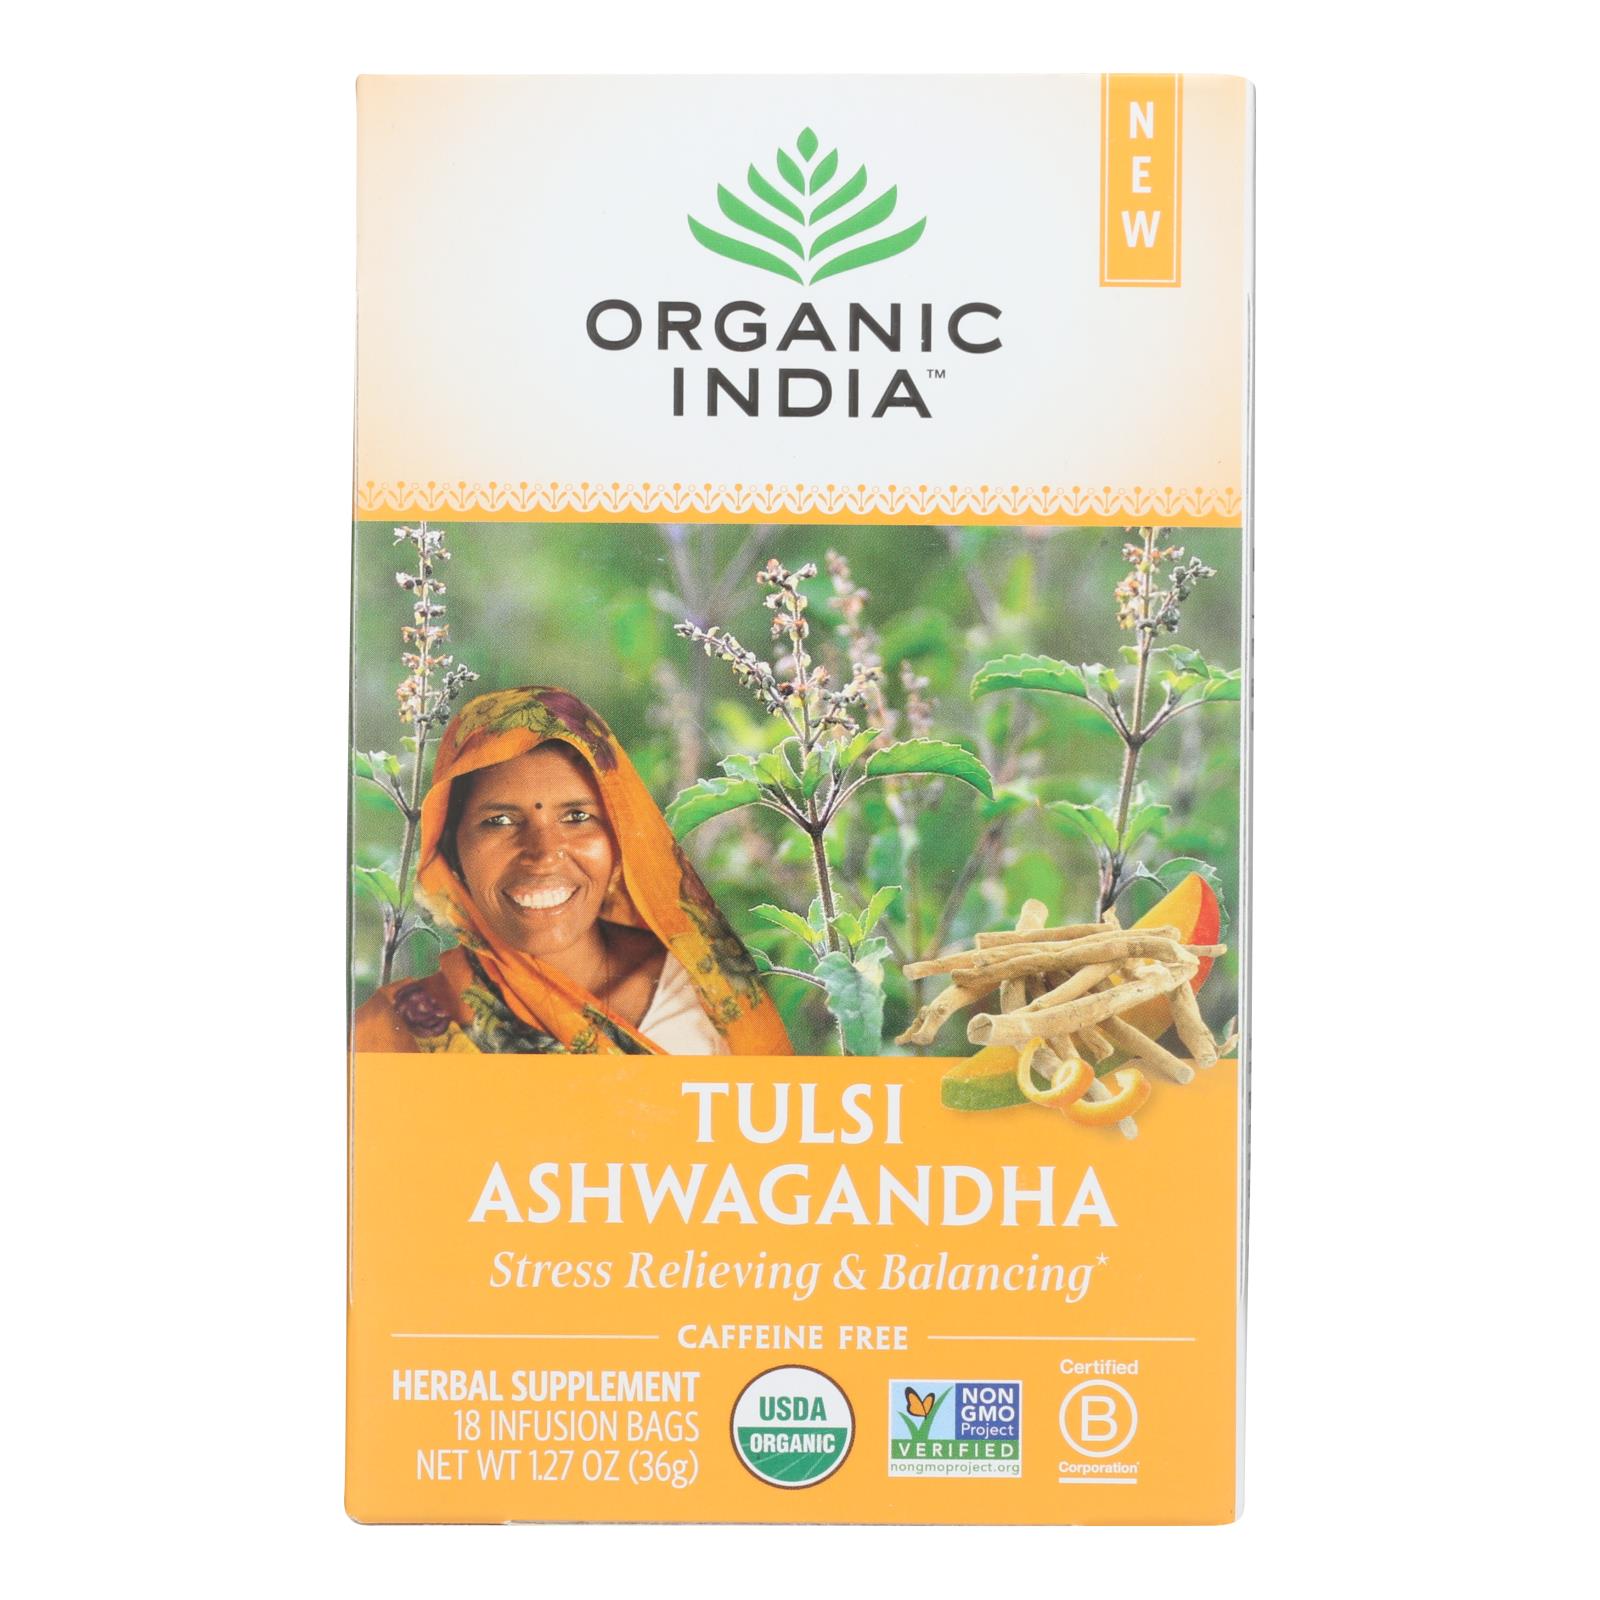 Organic India - Tulsi Ashwagandha - 6개 묶음상품 - 18 CT